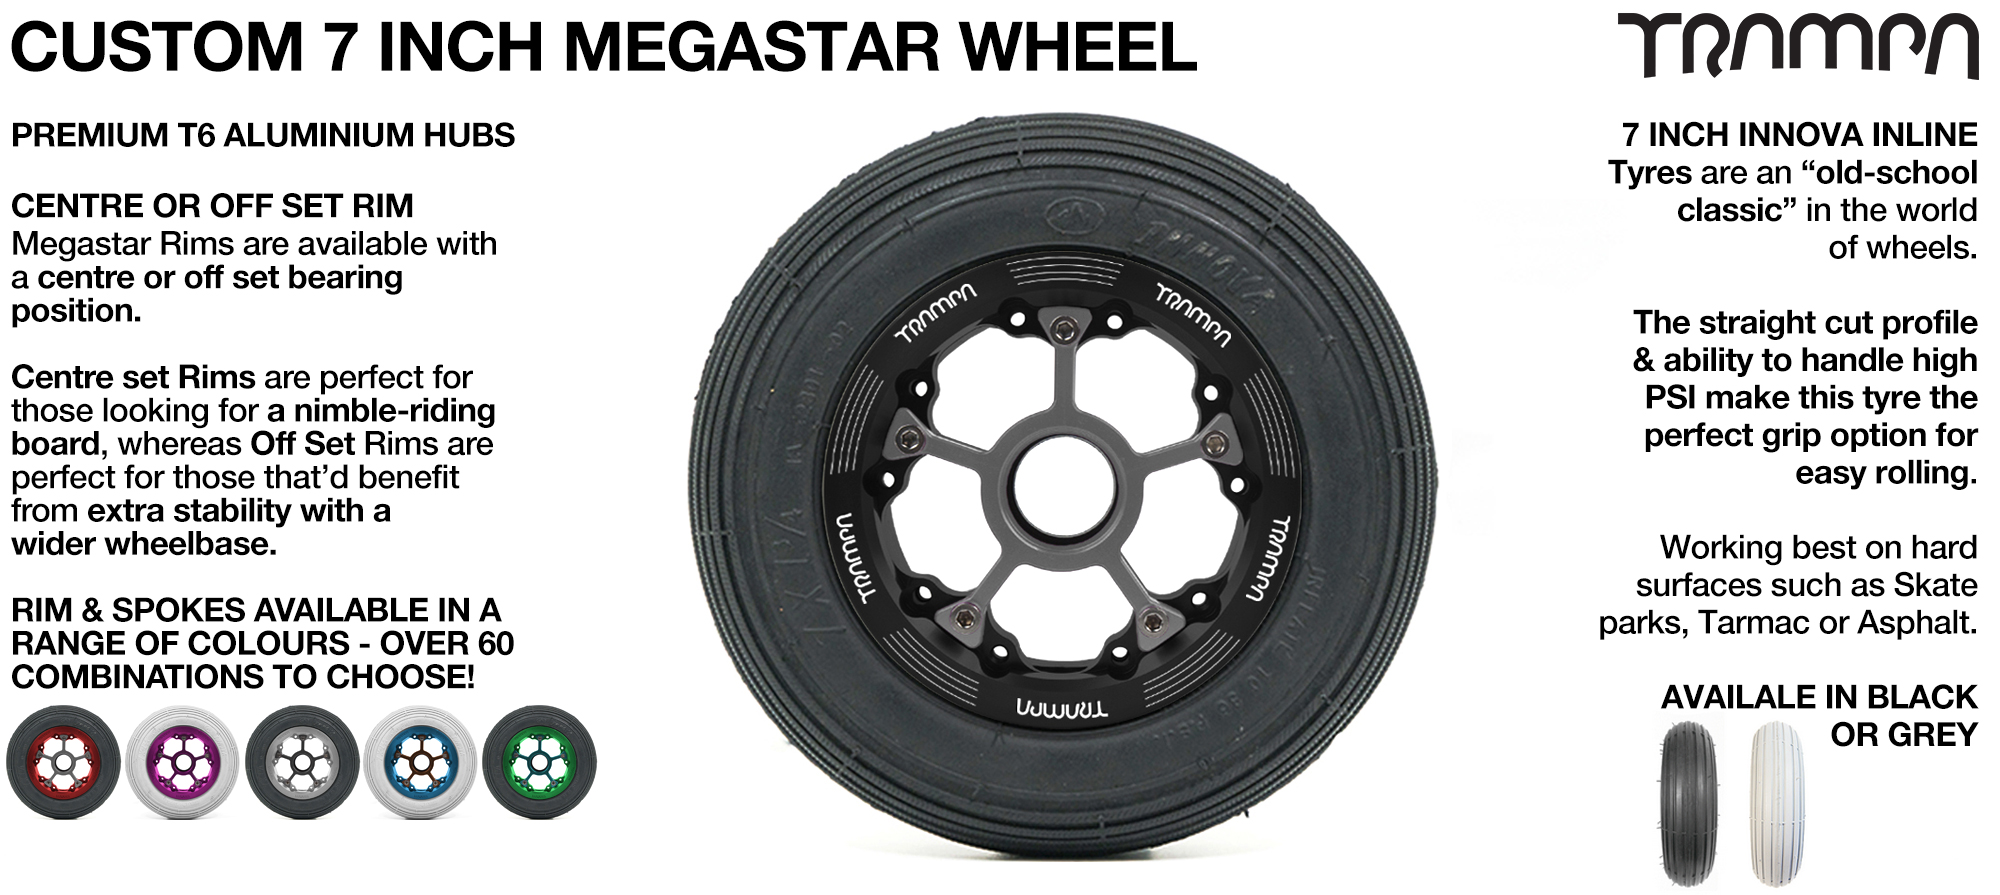 OFF-SET MEGASTAR 8 Hub with 7 Inch Tyres